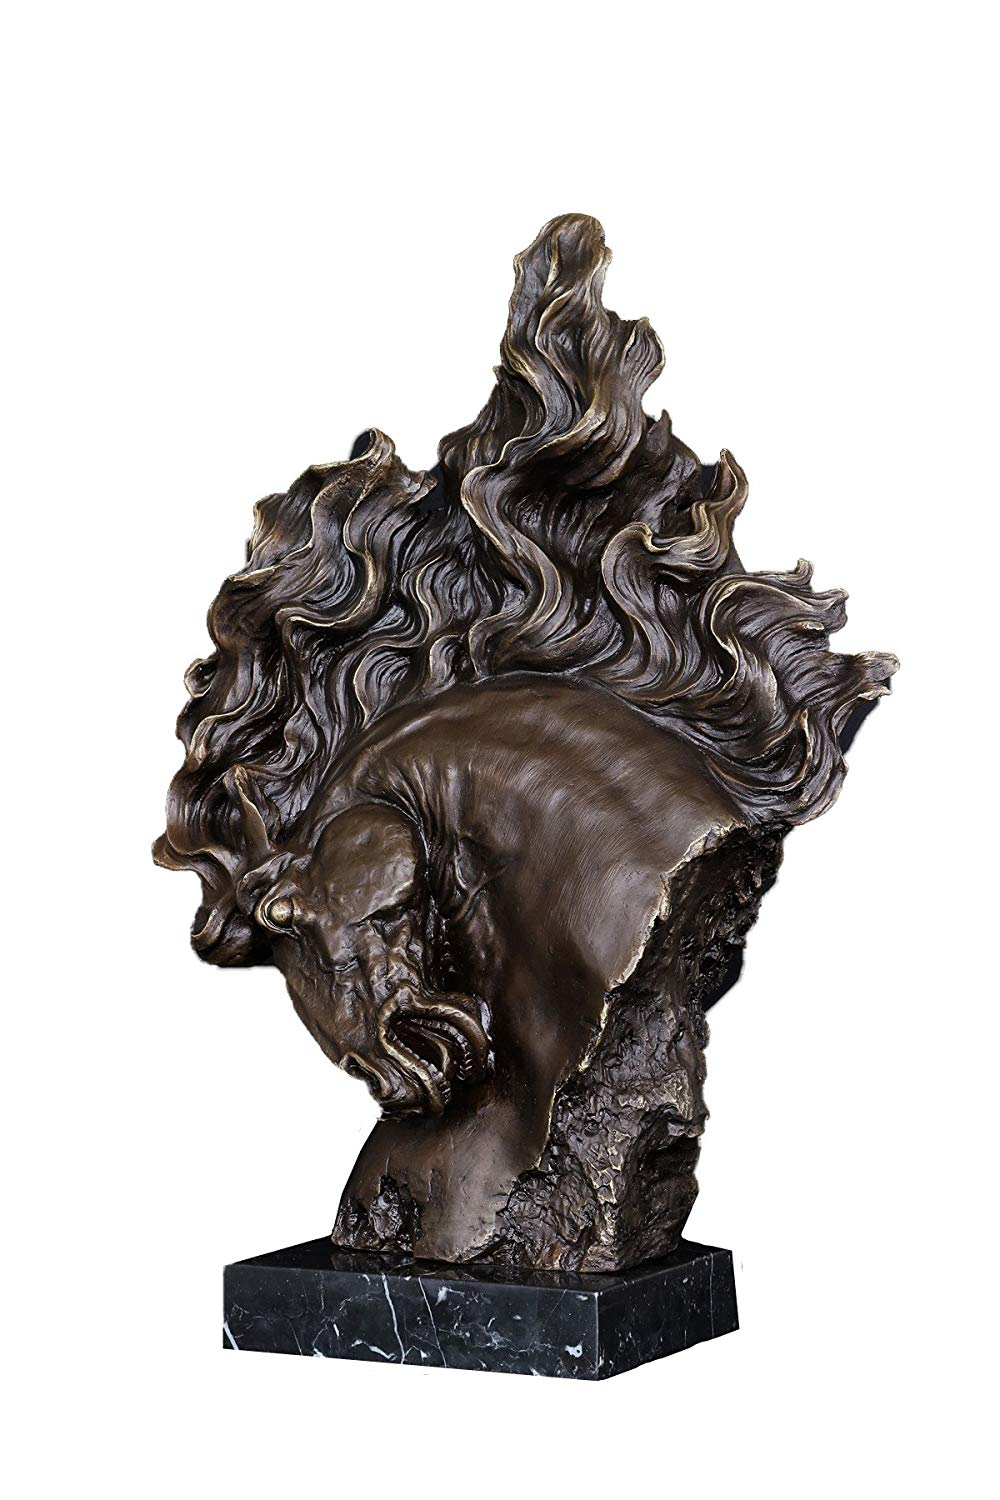 TPAL-003 bronze horse sculpture